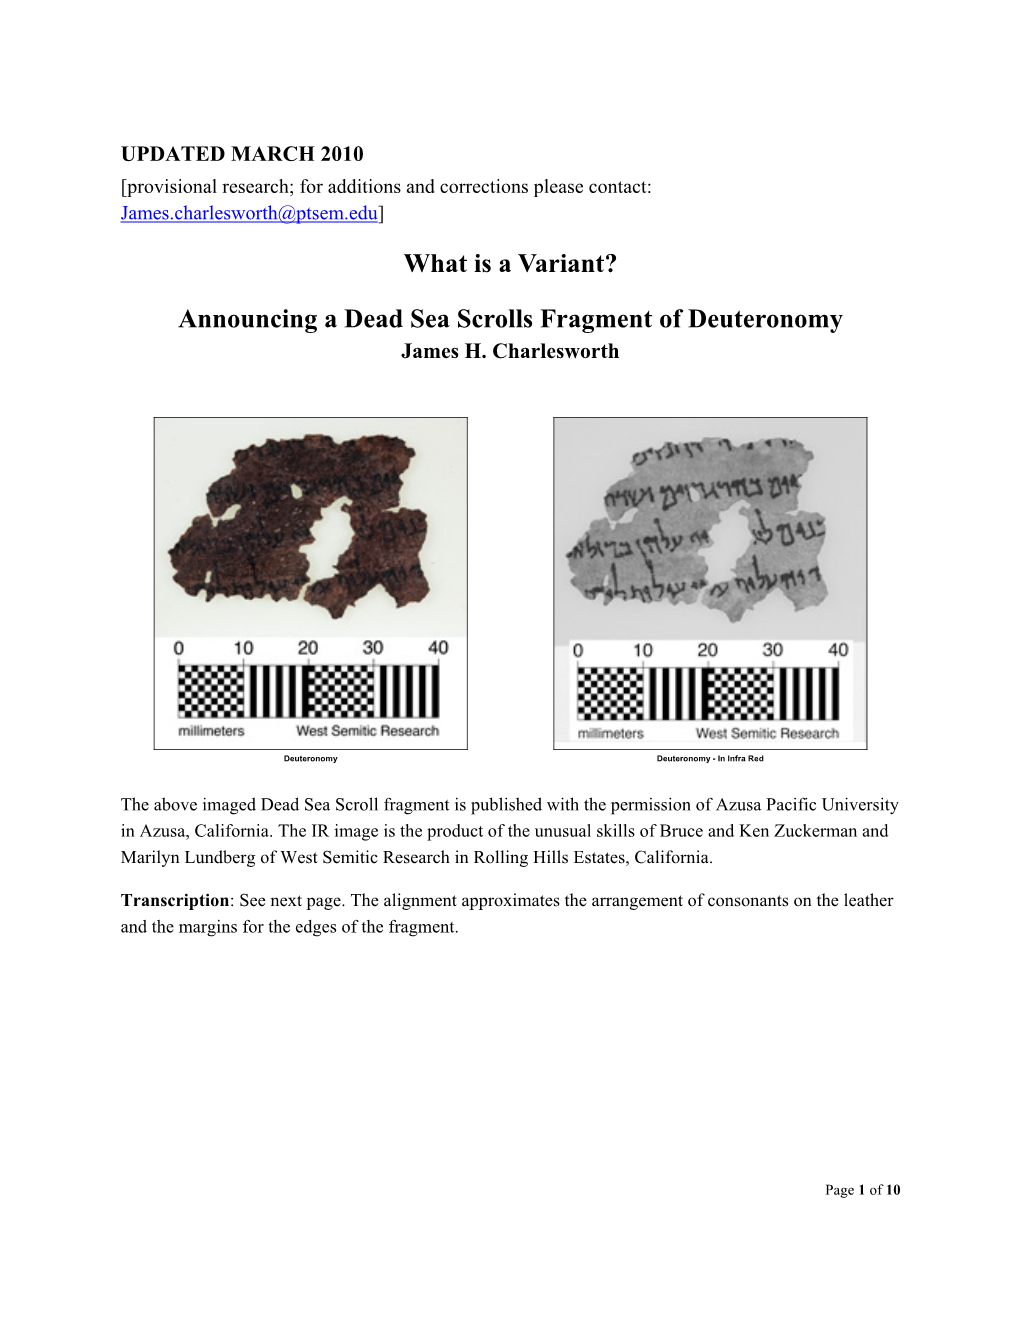 Announcing a Dead Sea Scrolls Fragment of Deuteronomy James H